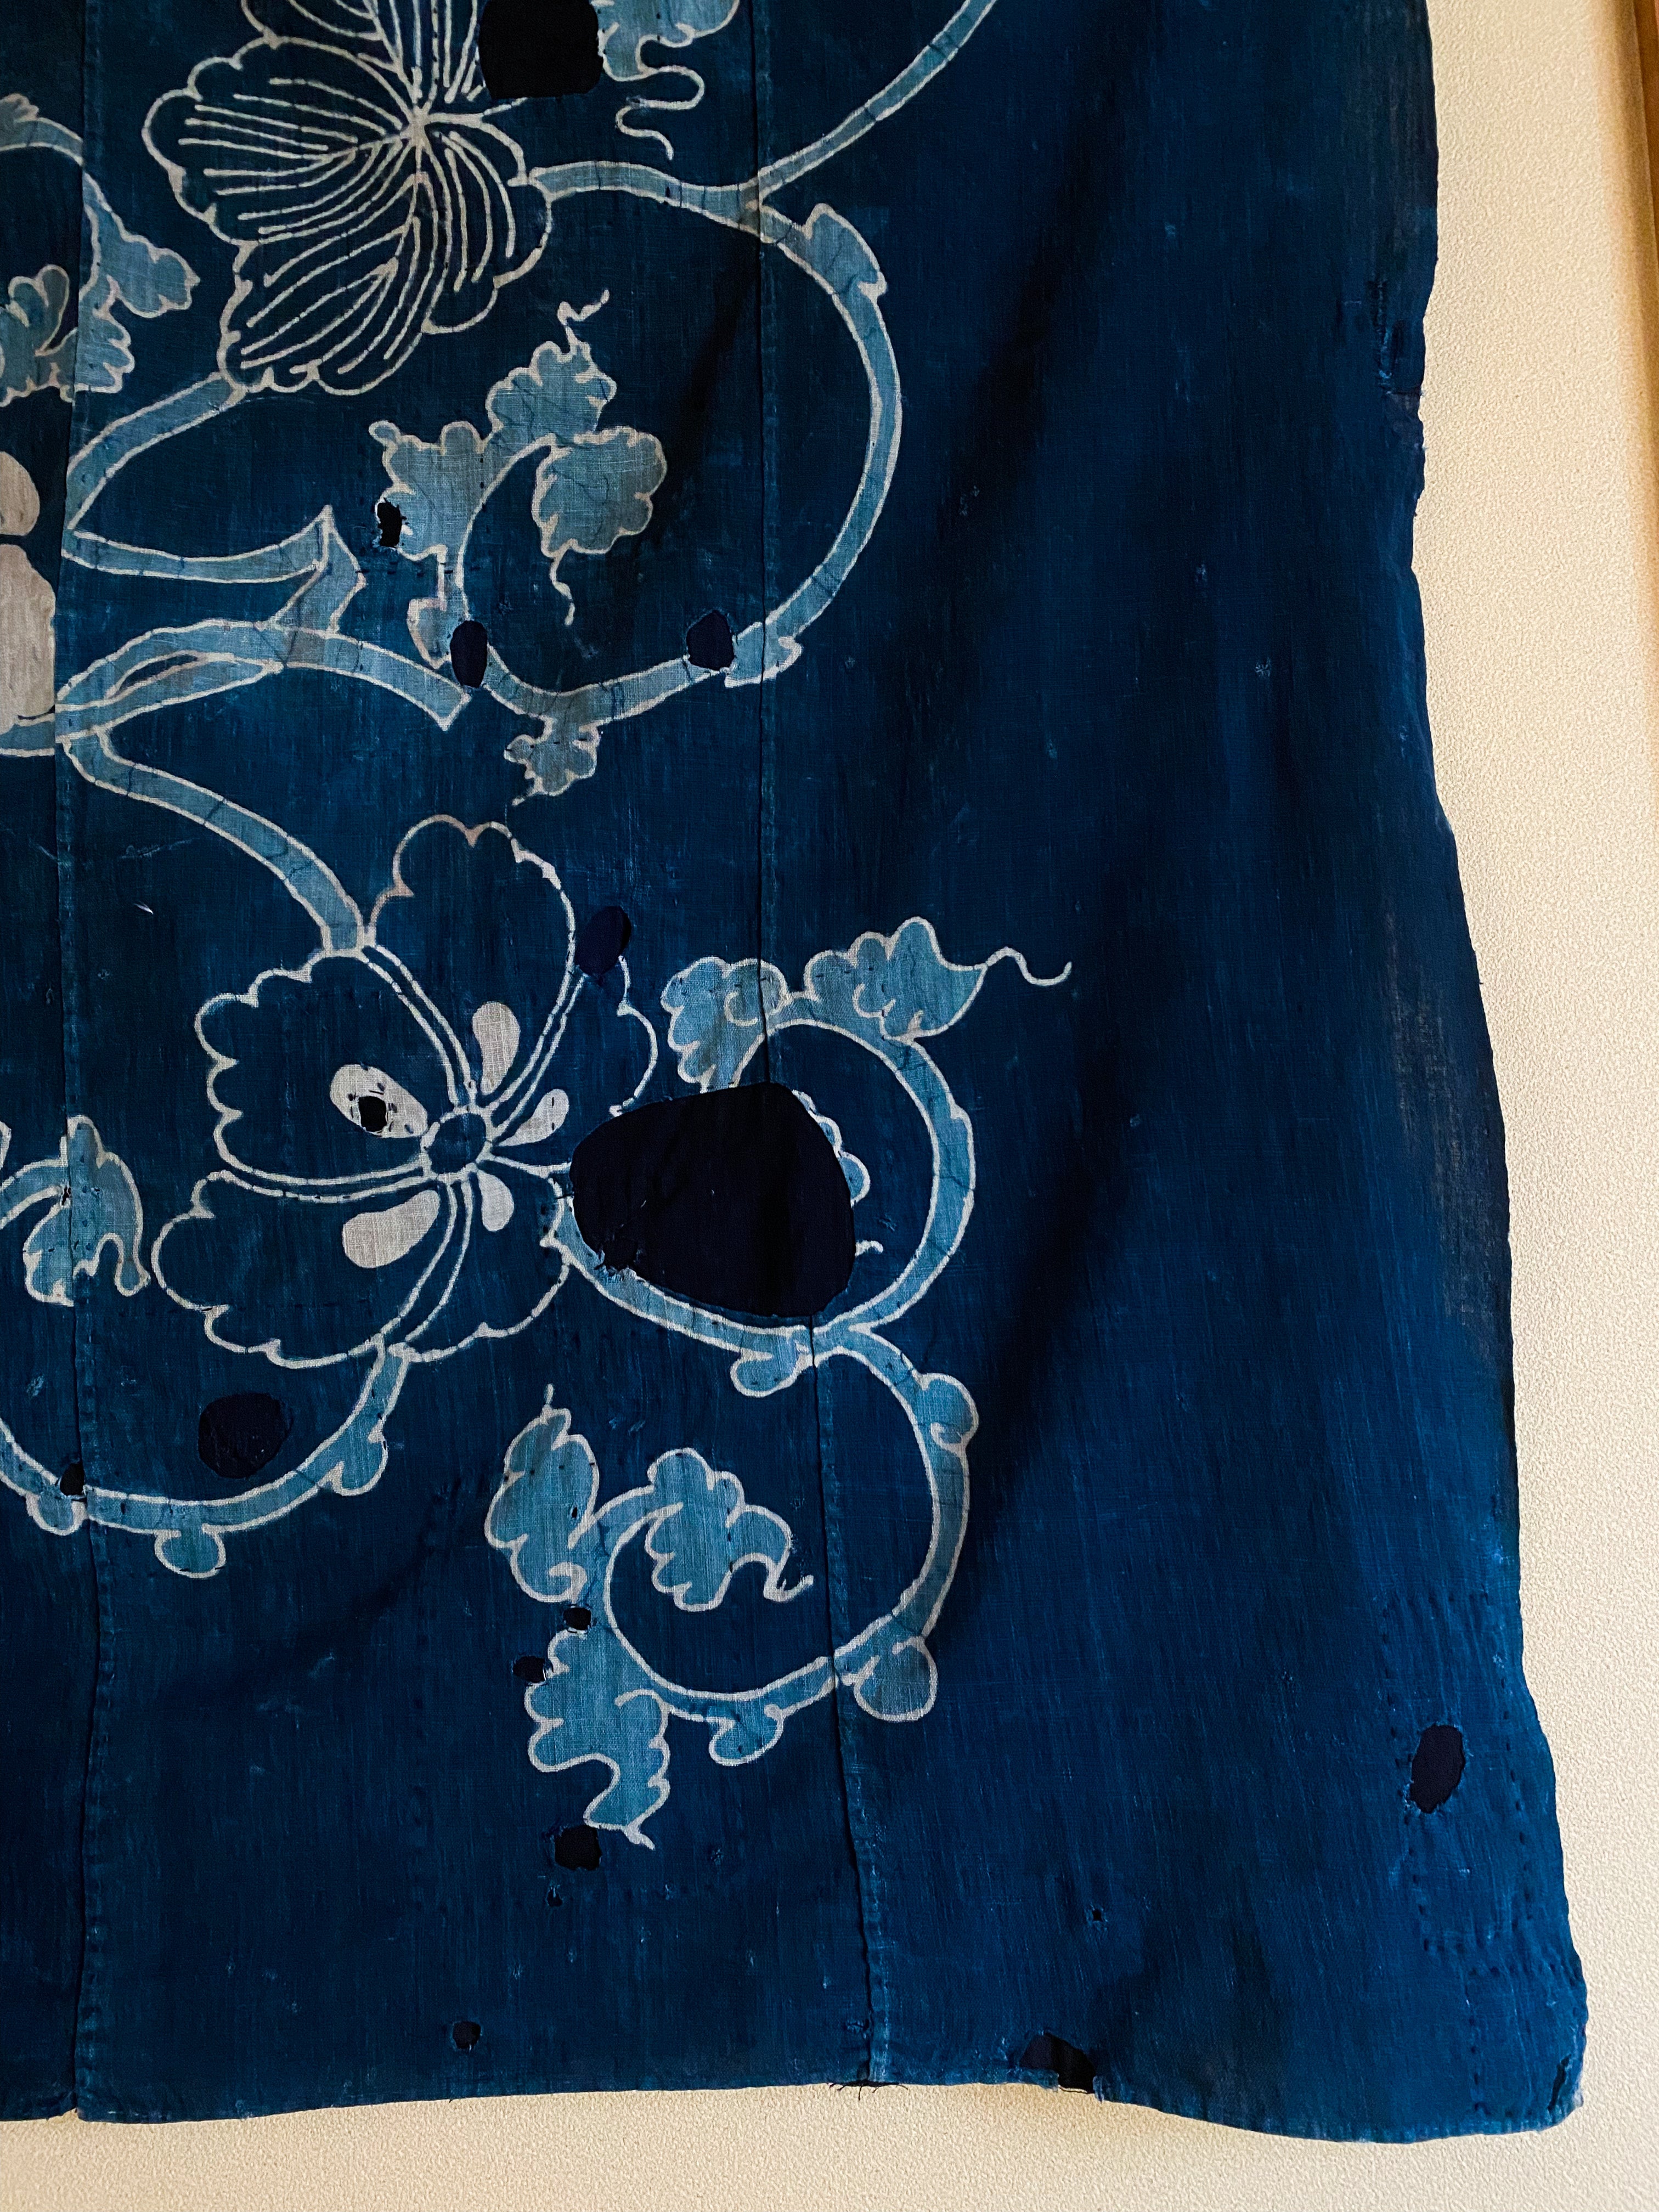 Super Rare Japanese Blue Indigo Dyed Boro Tsutsugaki Fabric